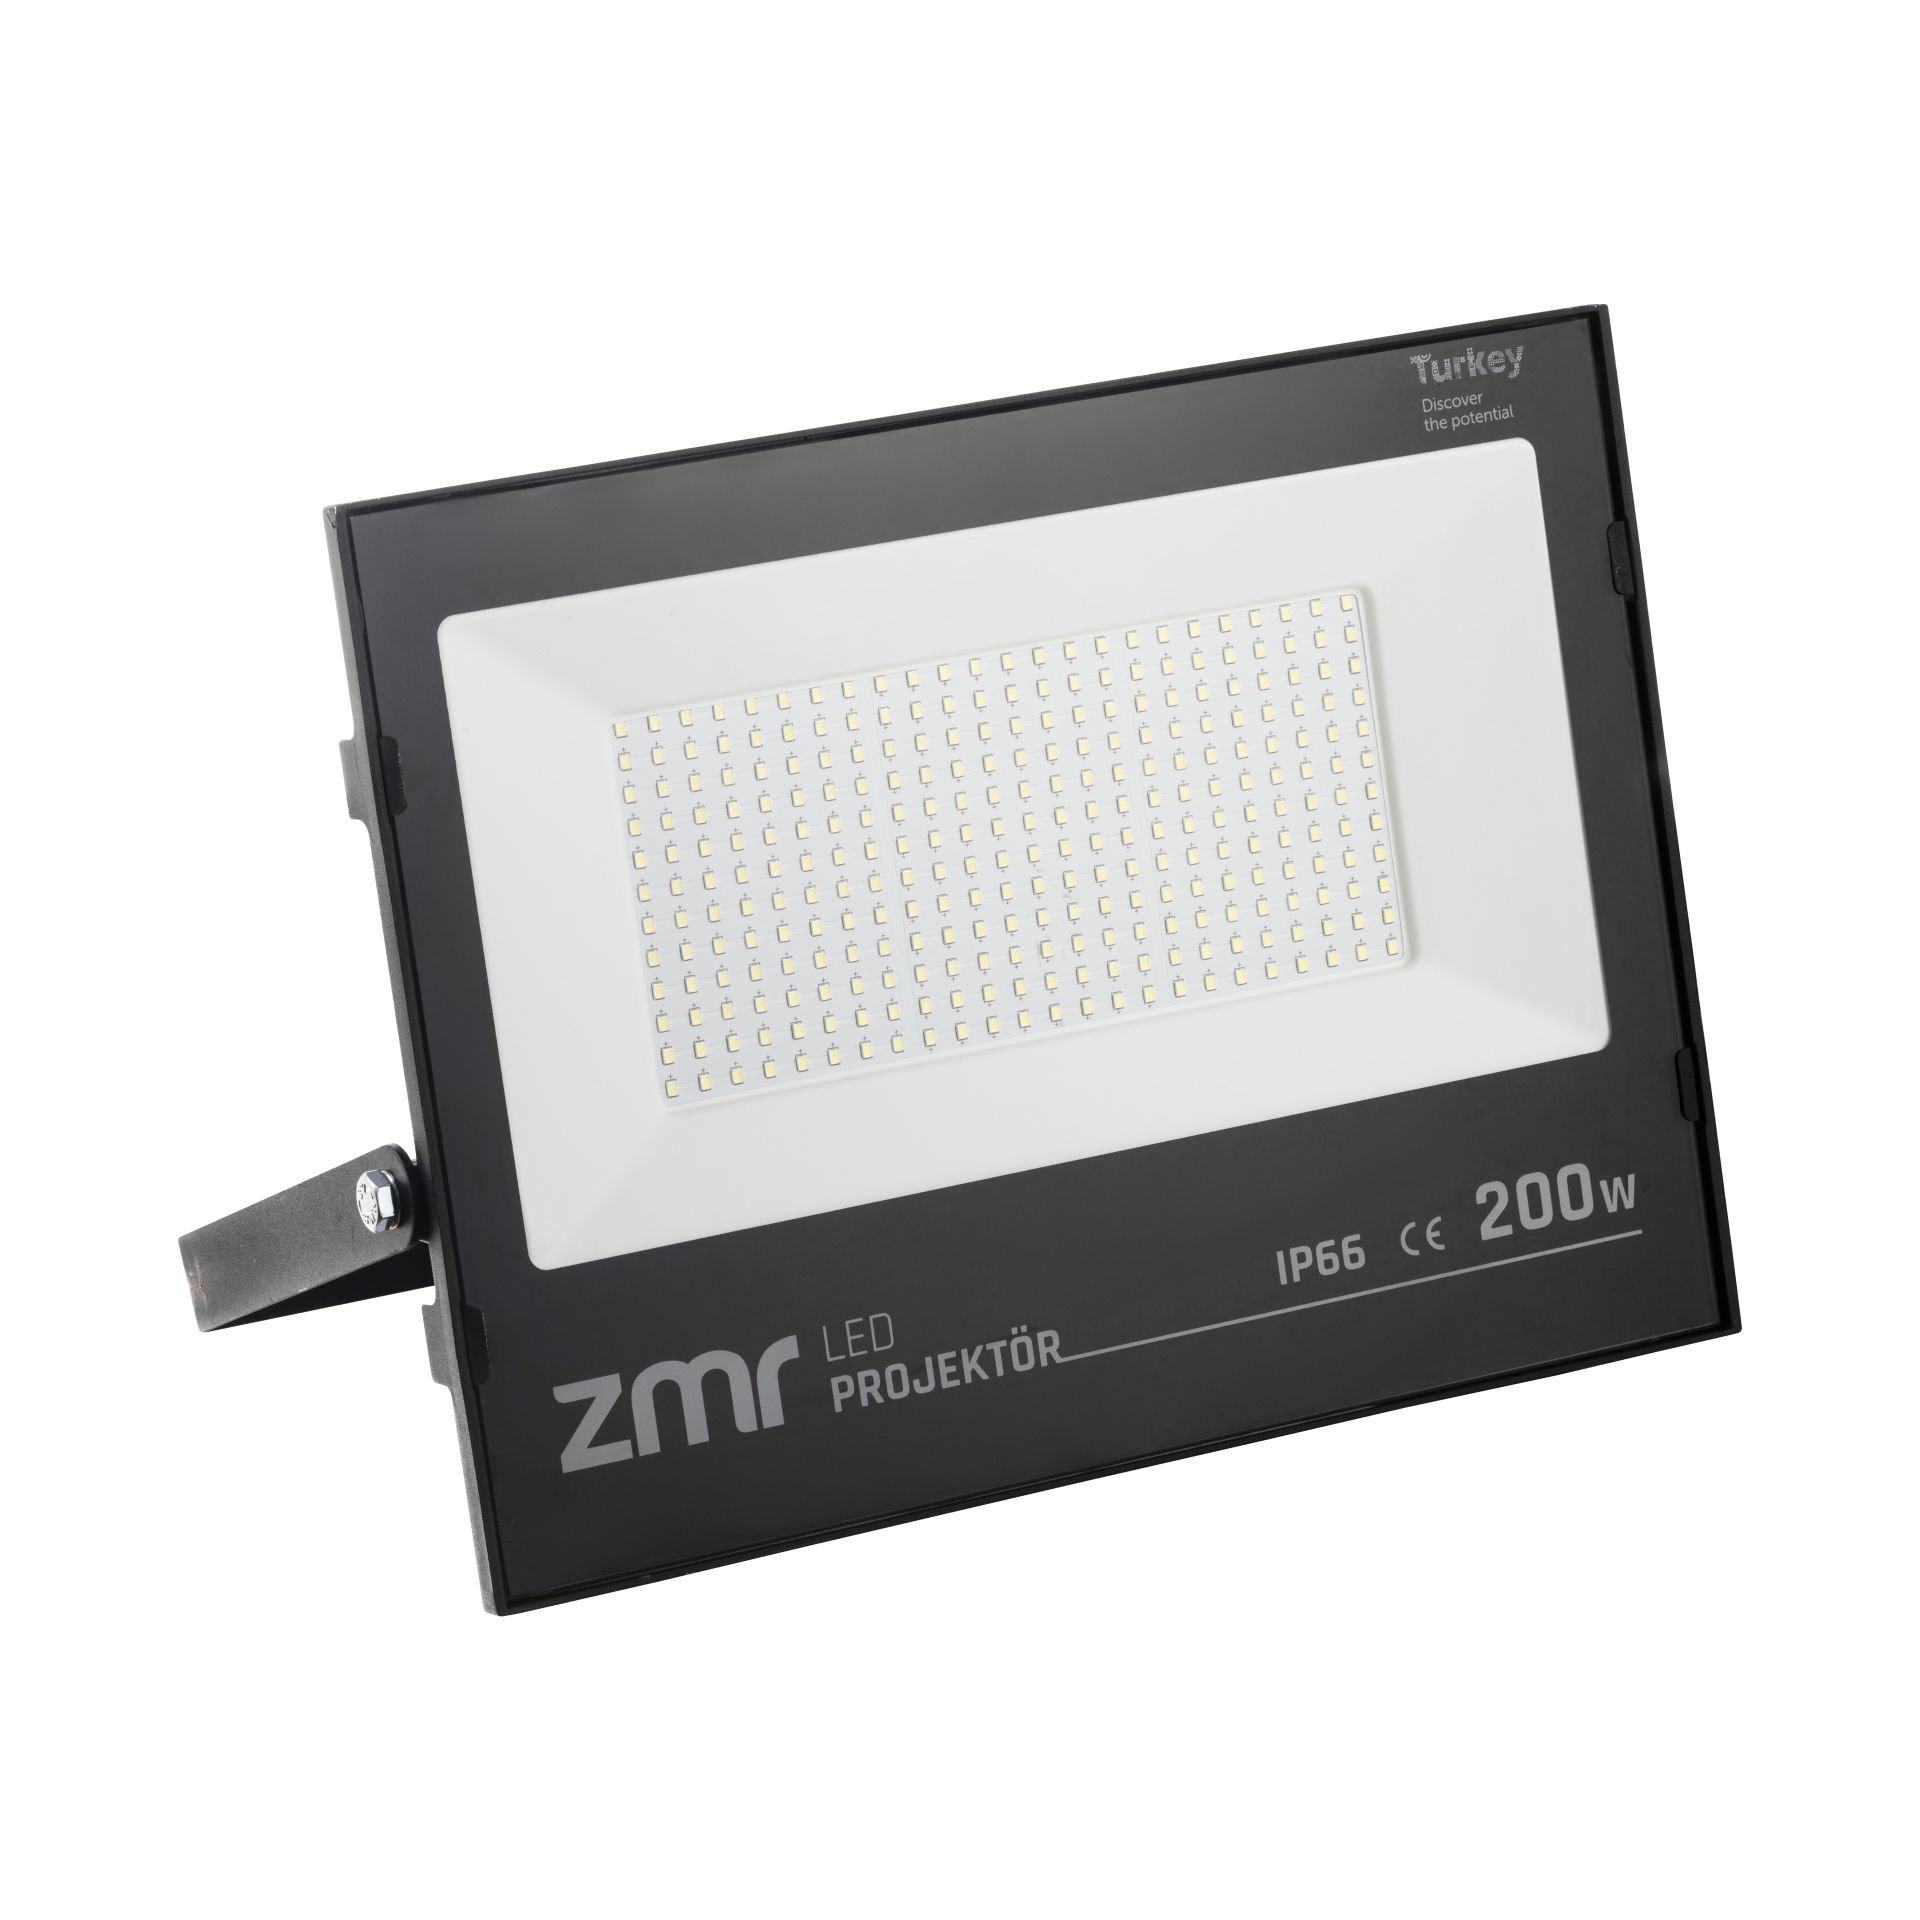 ZMR 200W Slim Led Projektör ZMR-305/S.